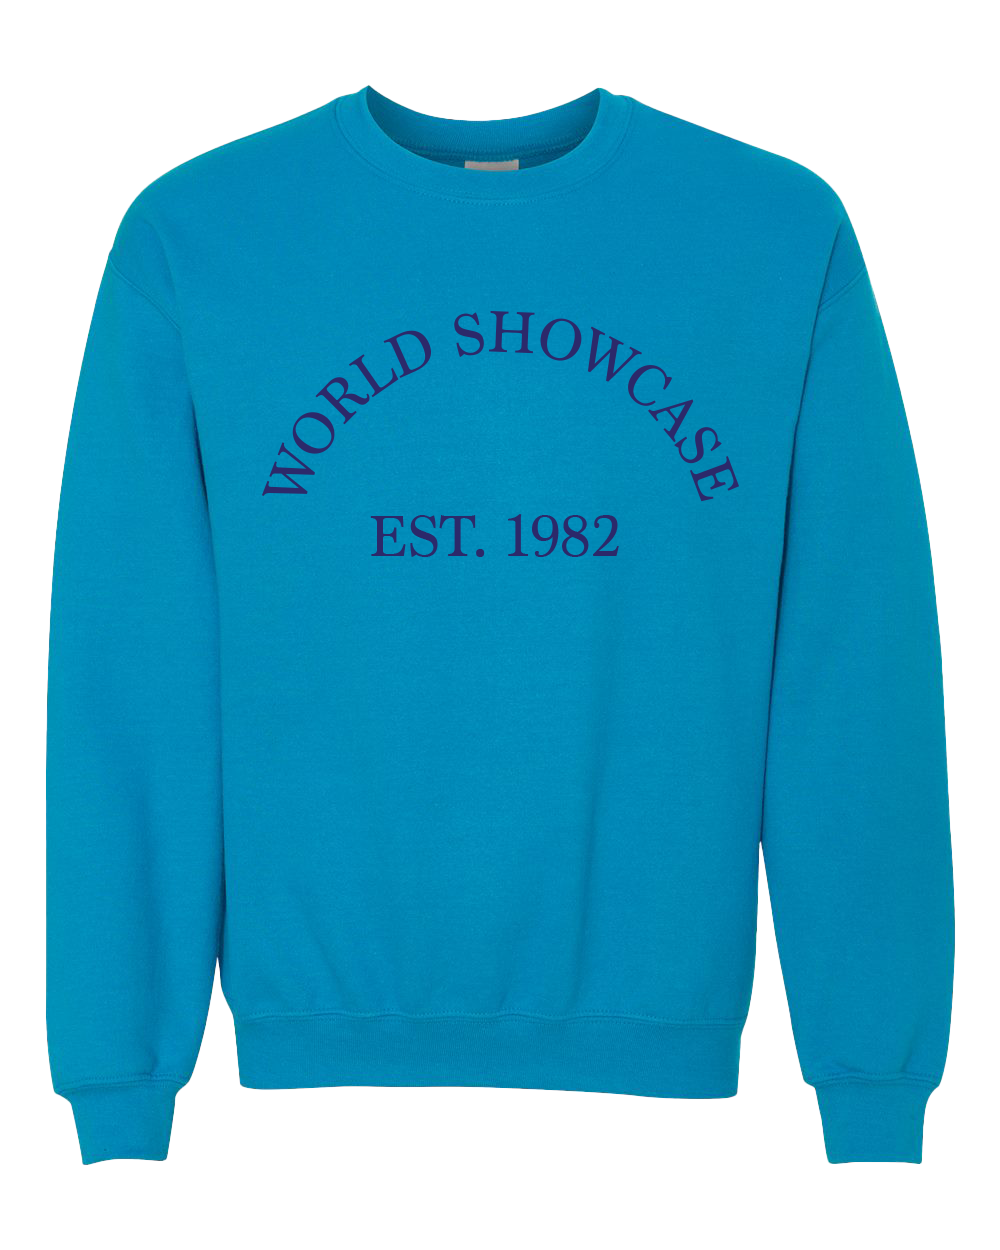 World Showcase crewneck sweatshirt